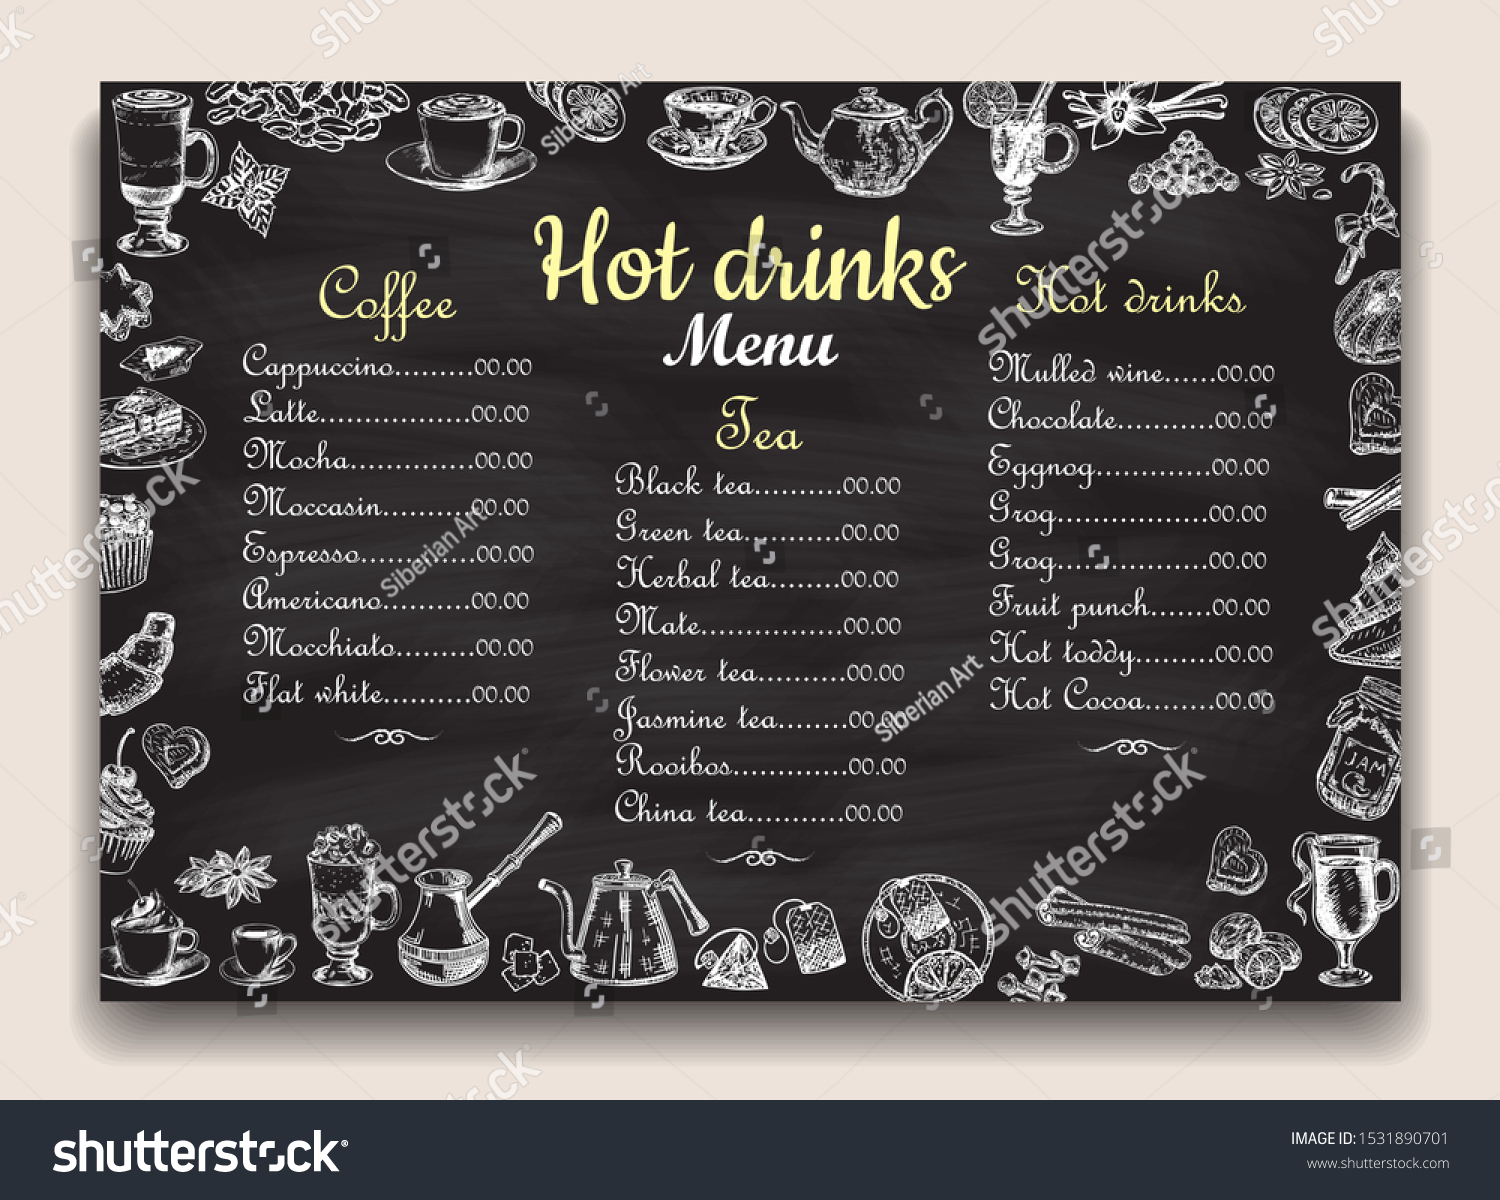 Cafe Restaurant Hot Drinks Menu List Stock Vector Royalty Free 1531890701